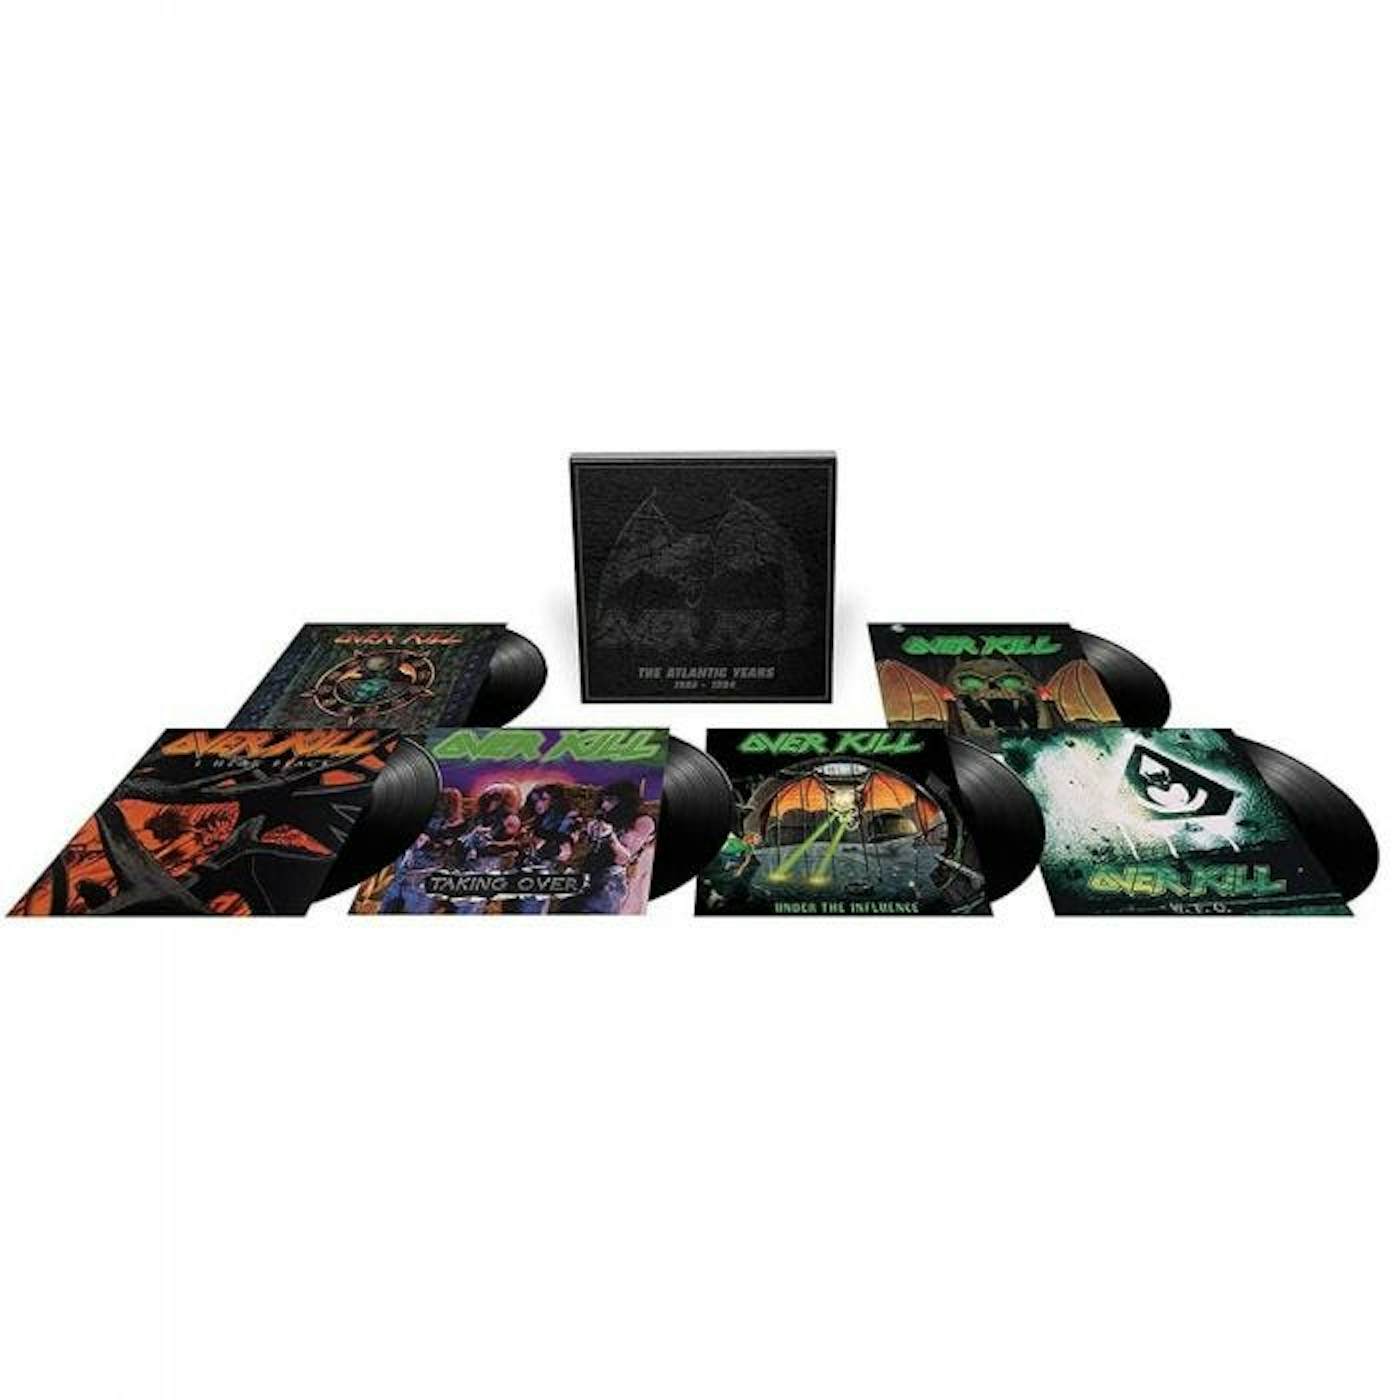 Overkill LP Vinyl Record - The Atlantic Years 19 86-19 96